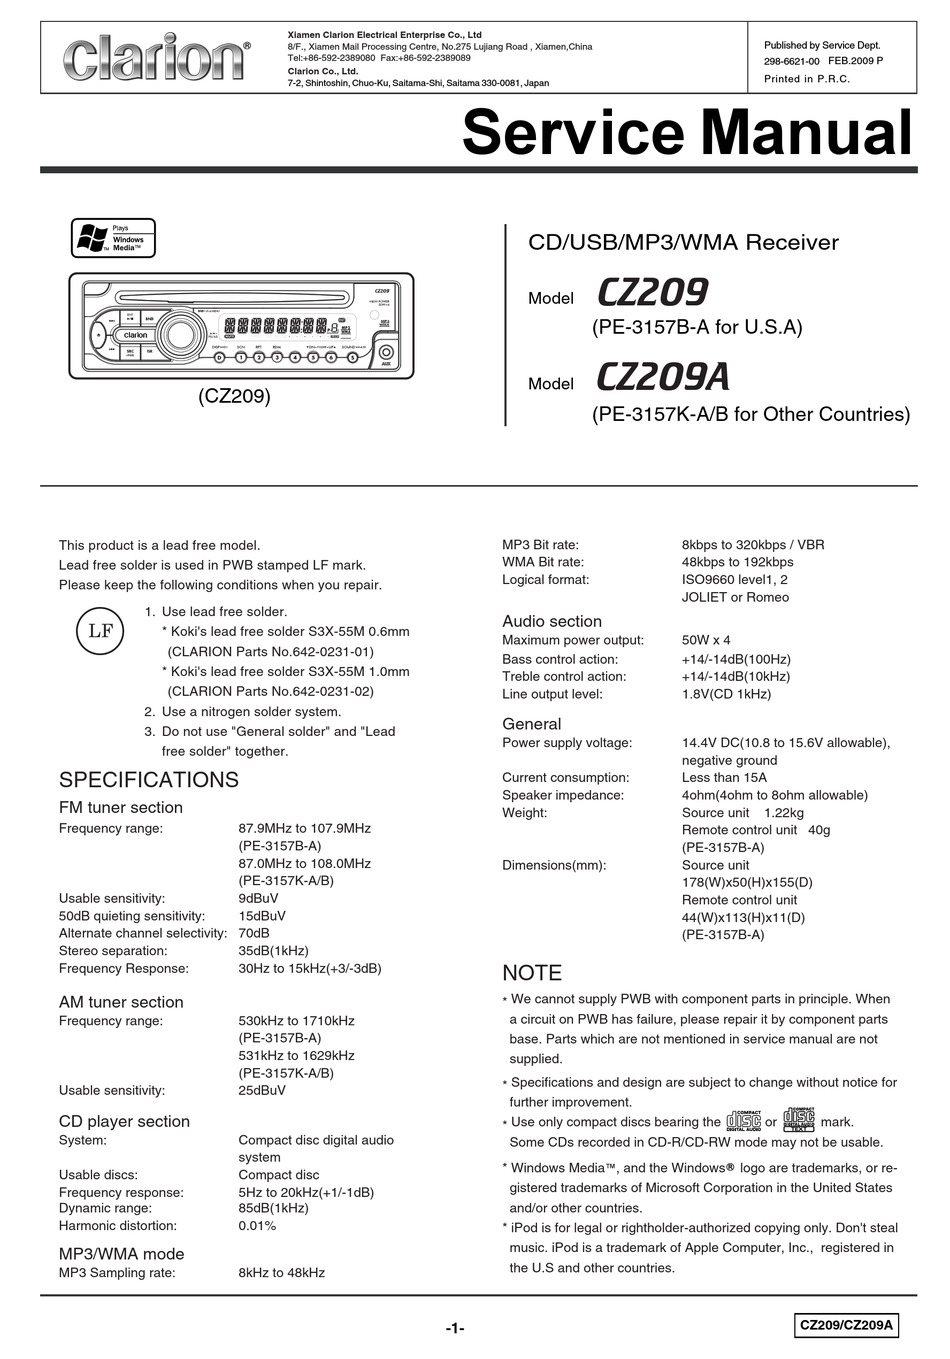 CLARION CZ209 SERVICE MANUAL Pdf Download | ManualsLib